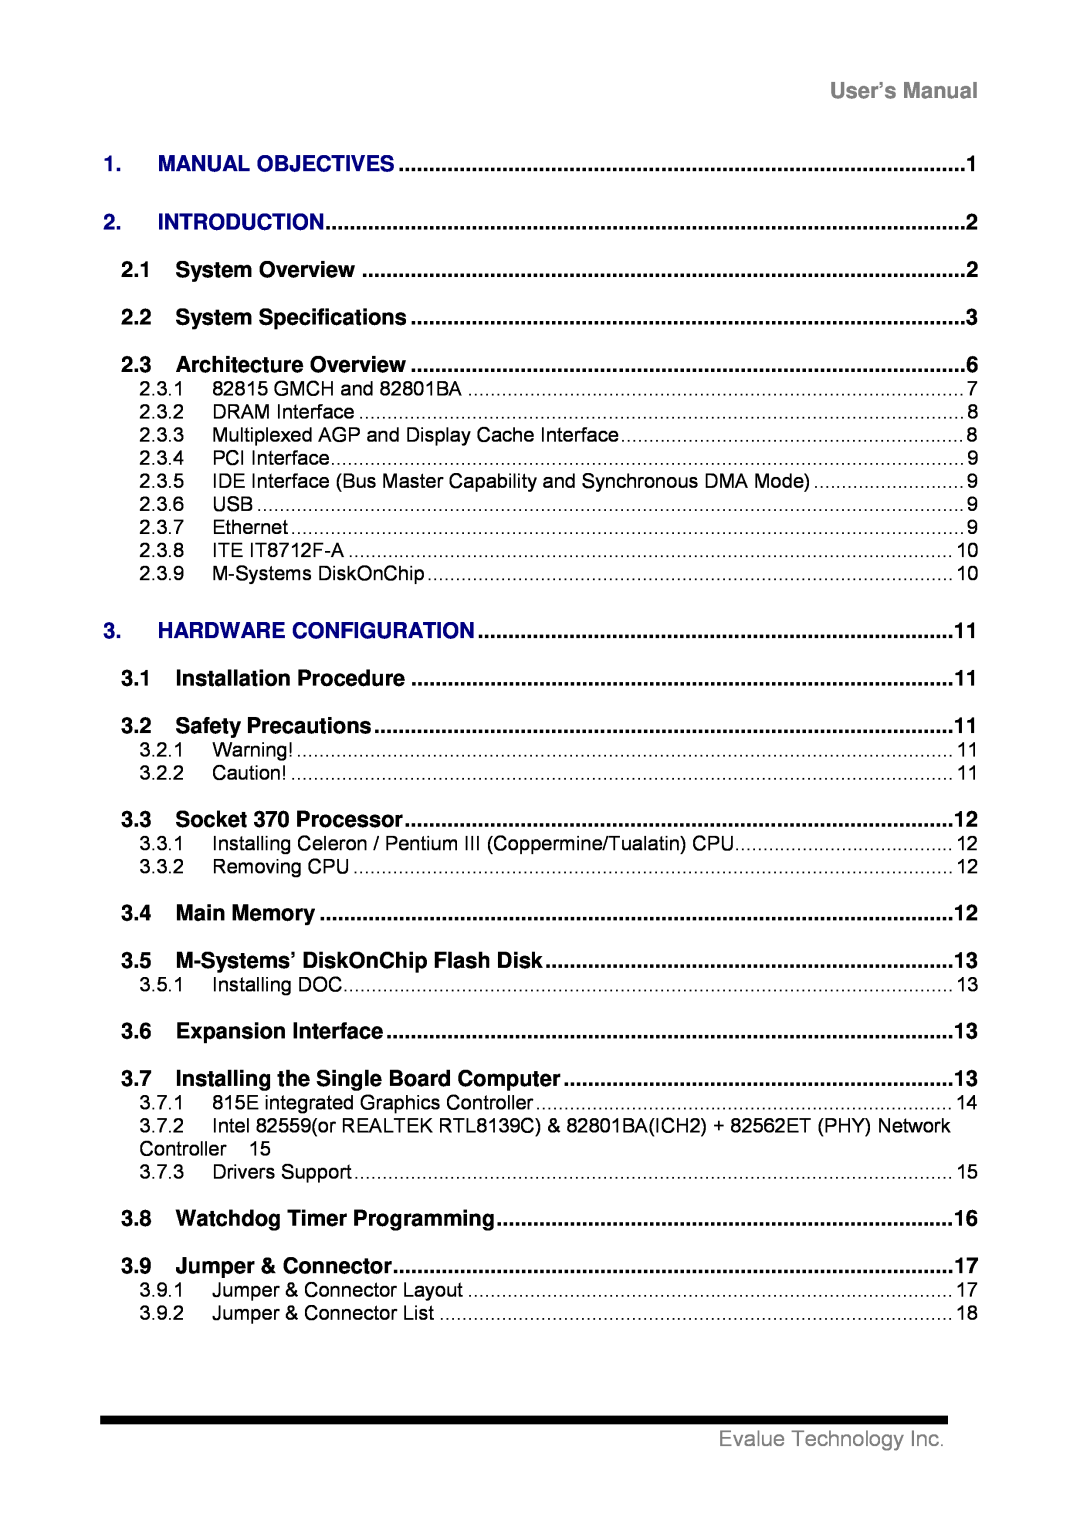 Intel ECB-865 user manual Watchdog Timer Programming, Jumper & Connector, User’s Manual, Evalue Technology Inc 